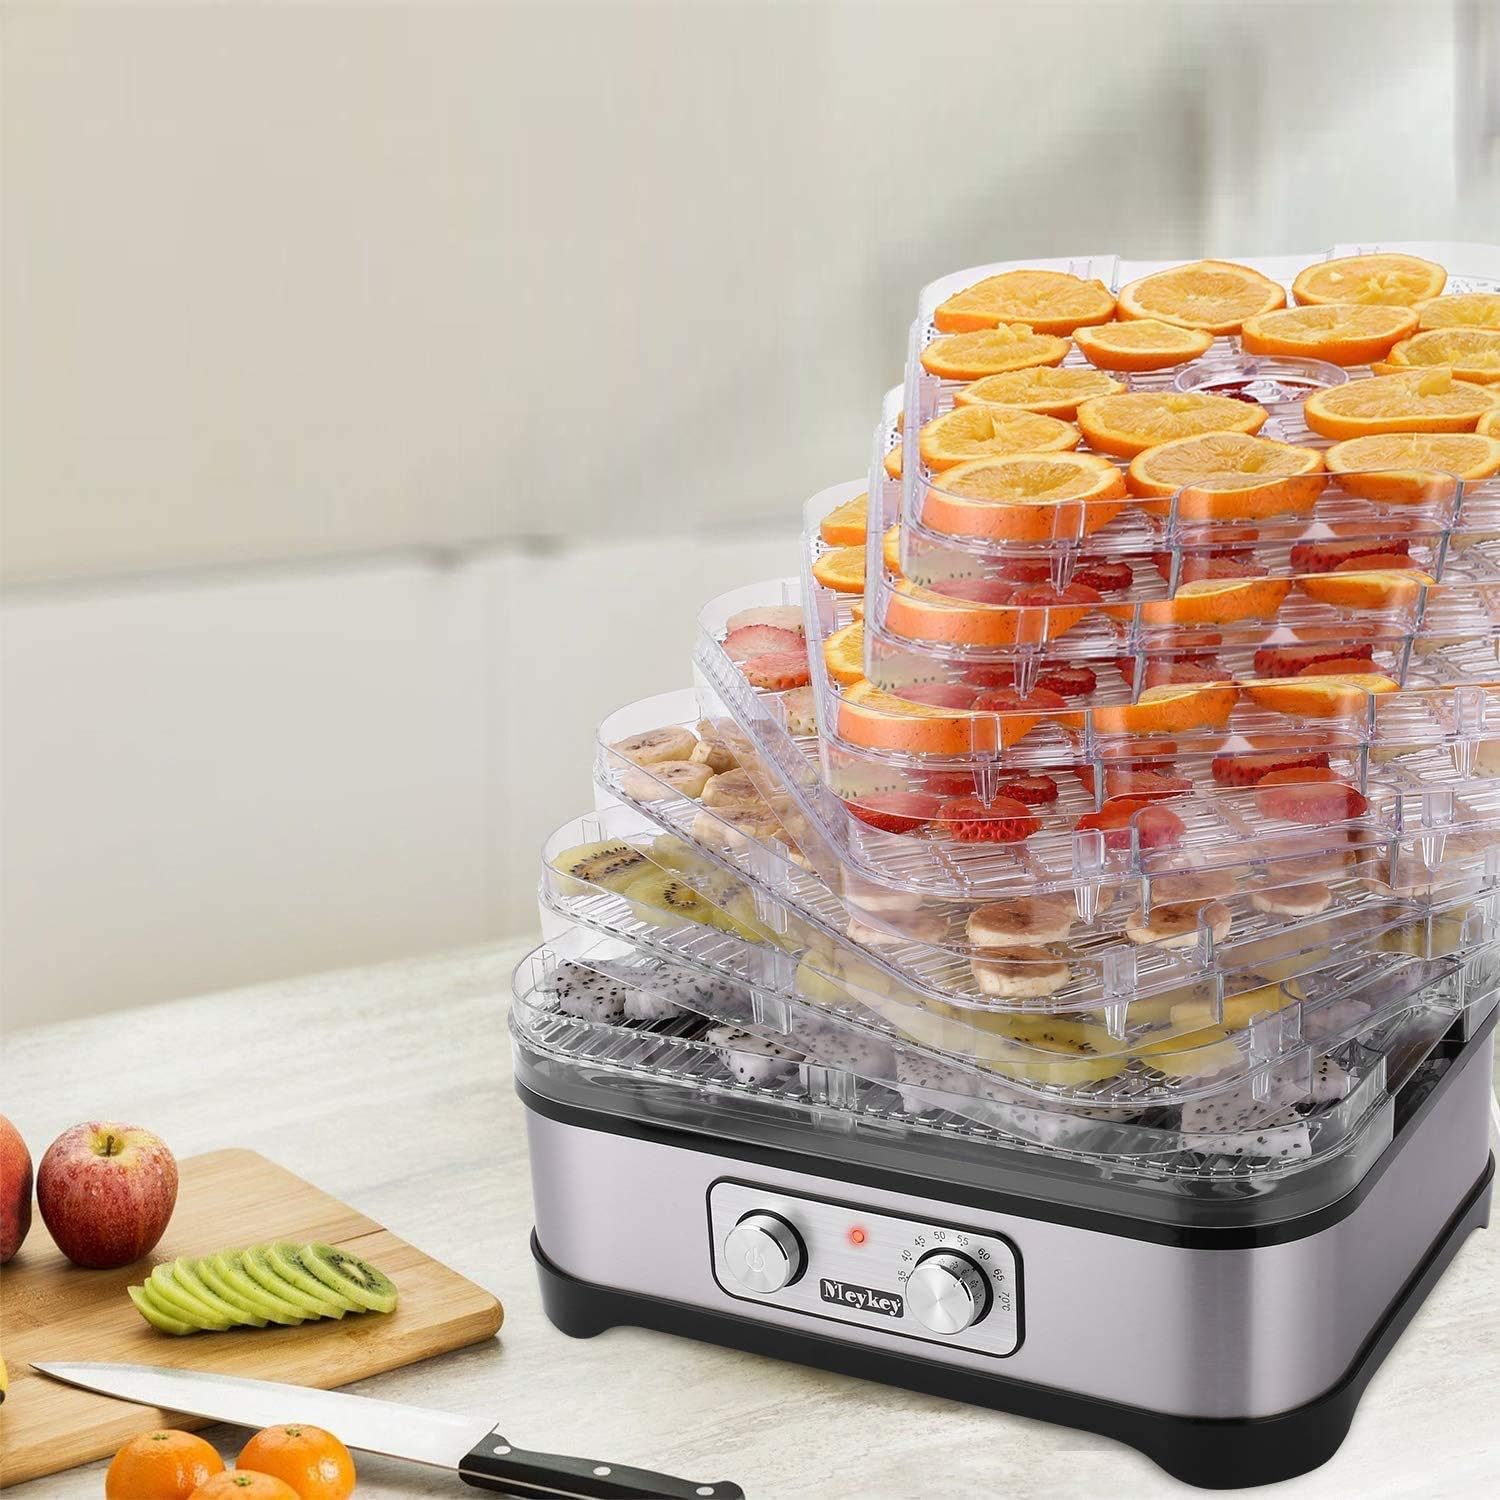 Homdox Food Dehydrator Machine,8-Tray Fruit Dehydrator with Temperature Control Knob Button for Meat/Fruit/Vegetable,400 Watt,BPA Free